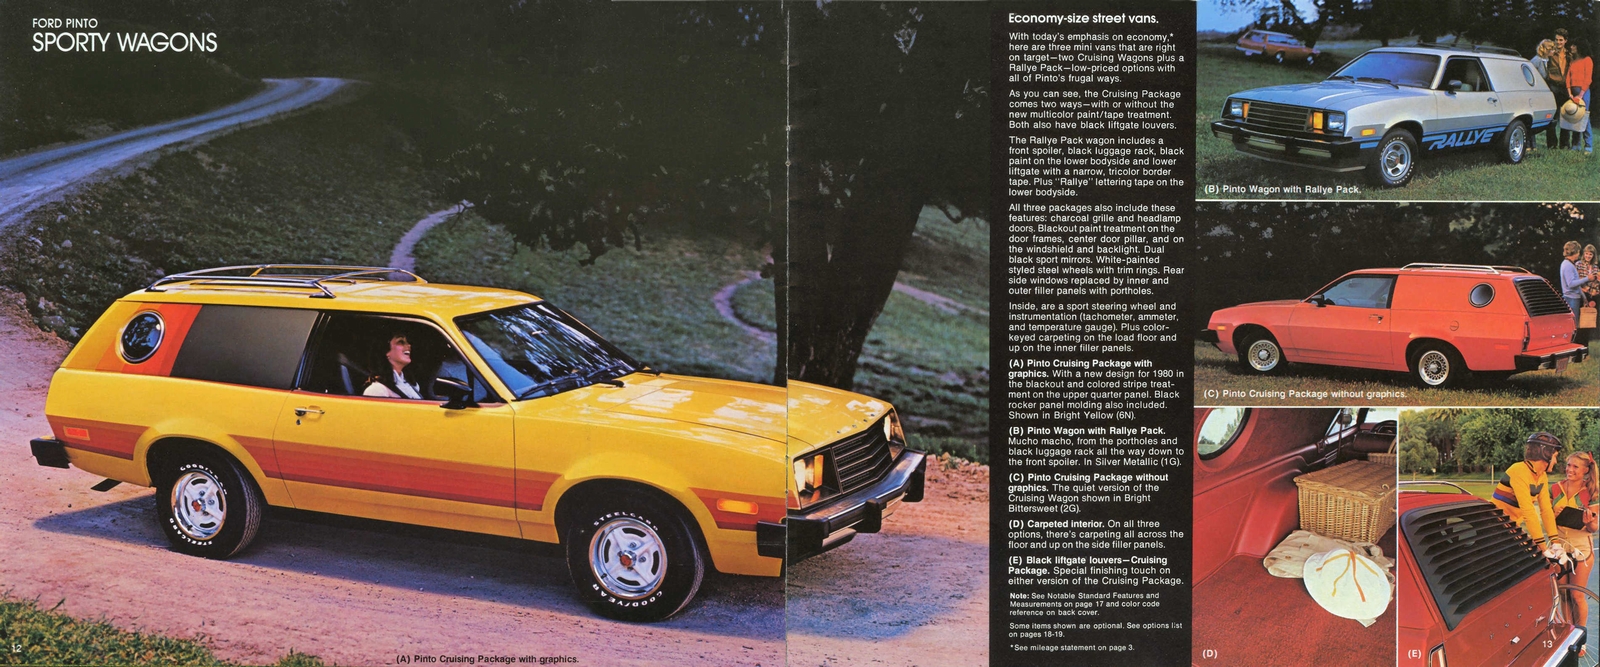 n_1980 Ford Pinto-12-13.jpg